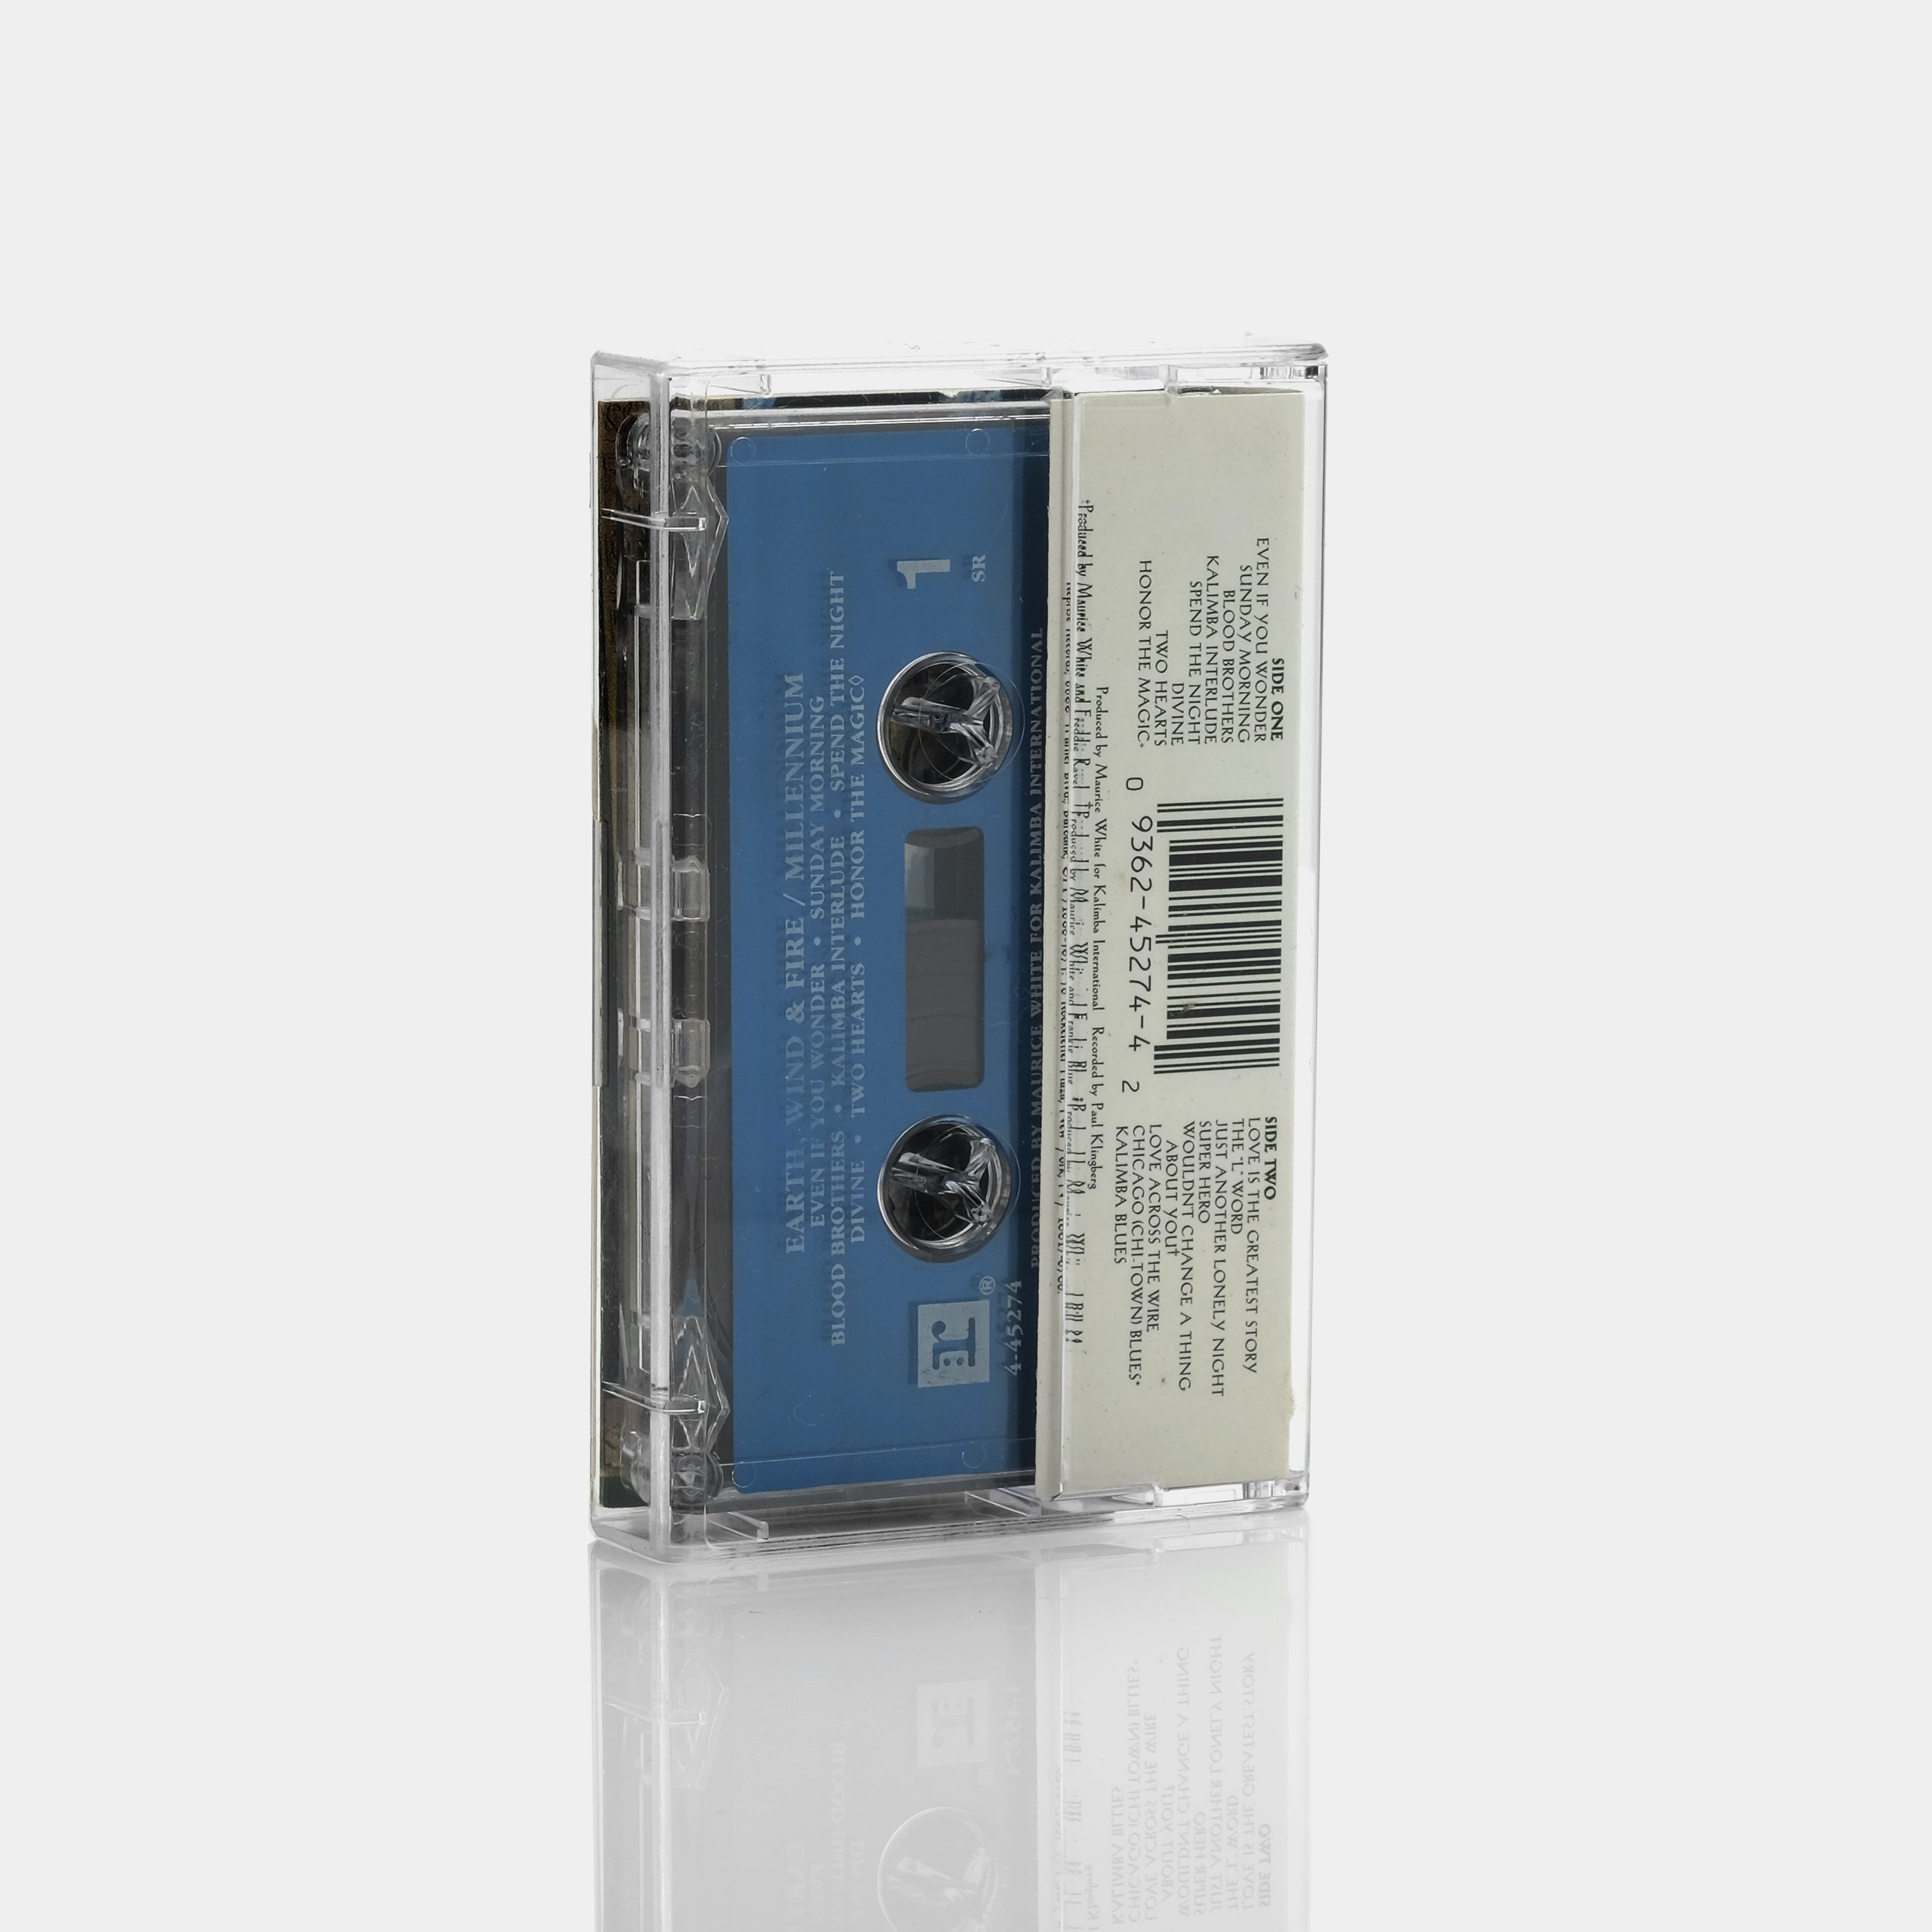 Earth, Wind & Fire - Millennium Cassette Tape